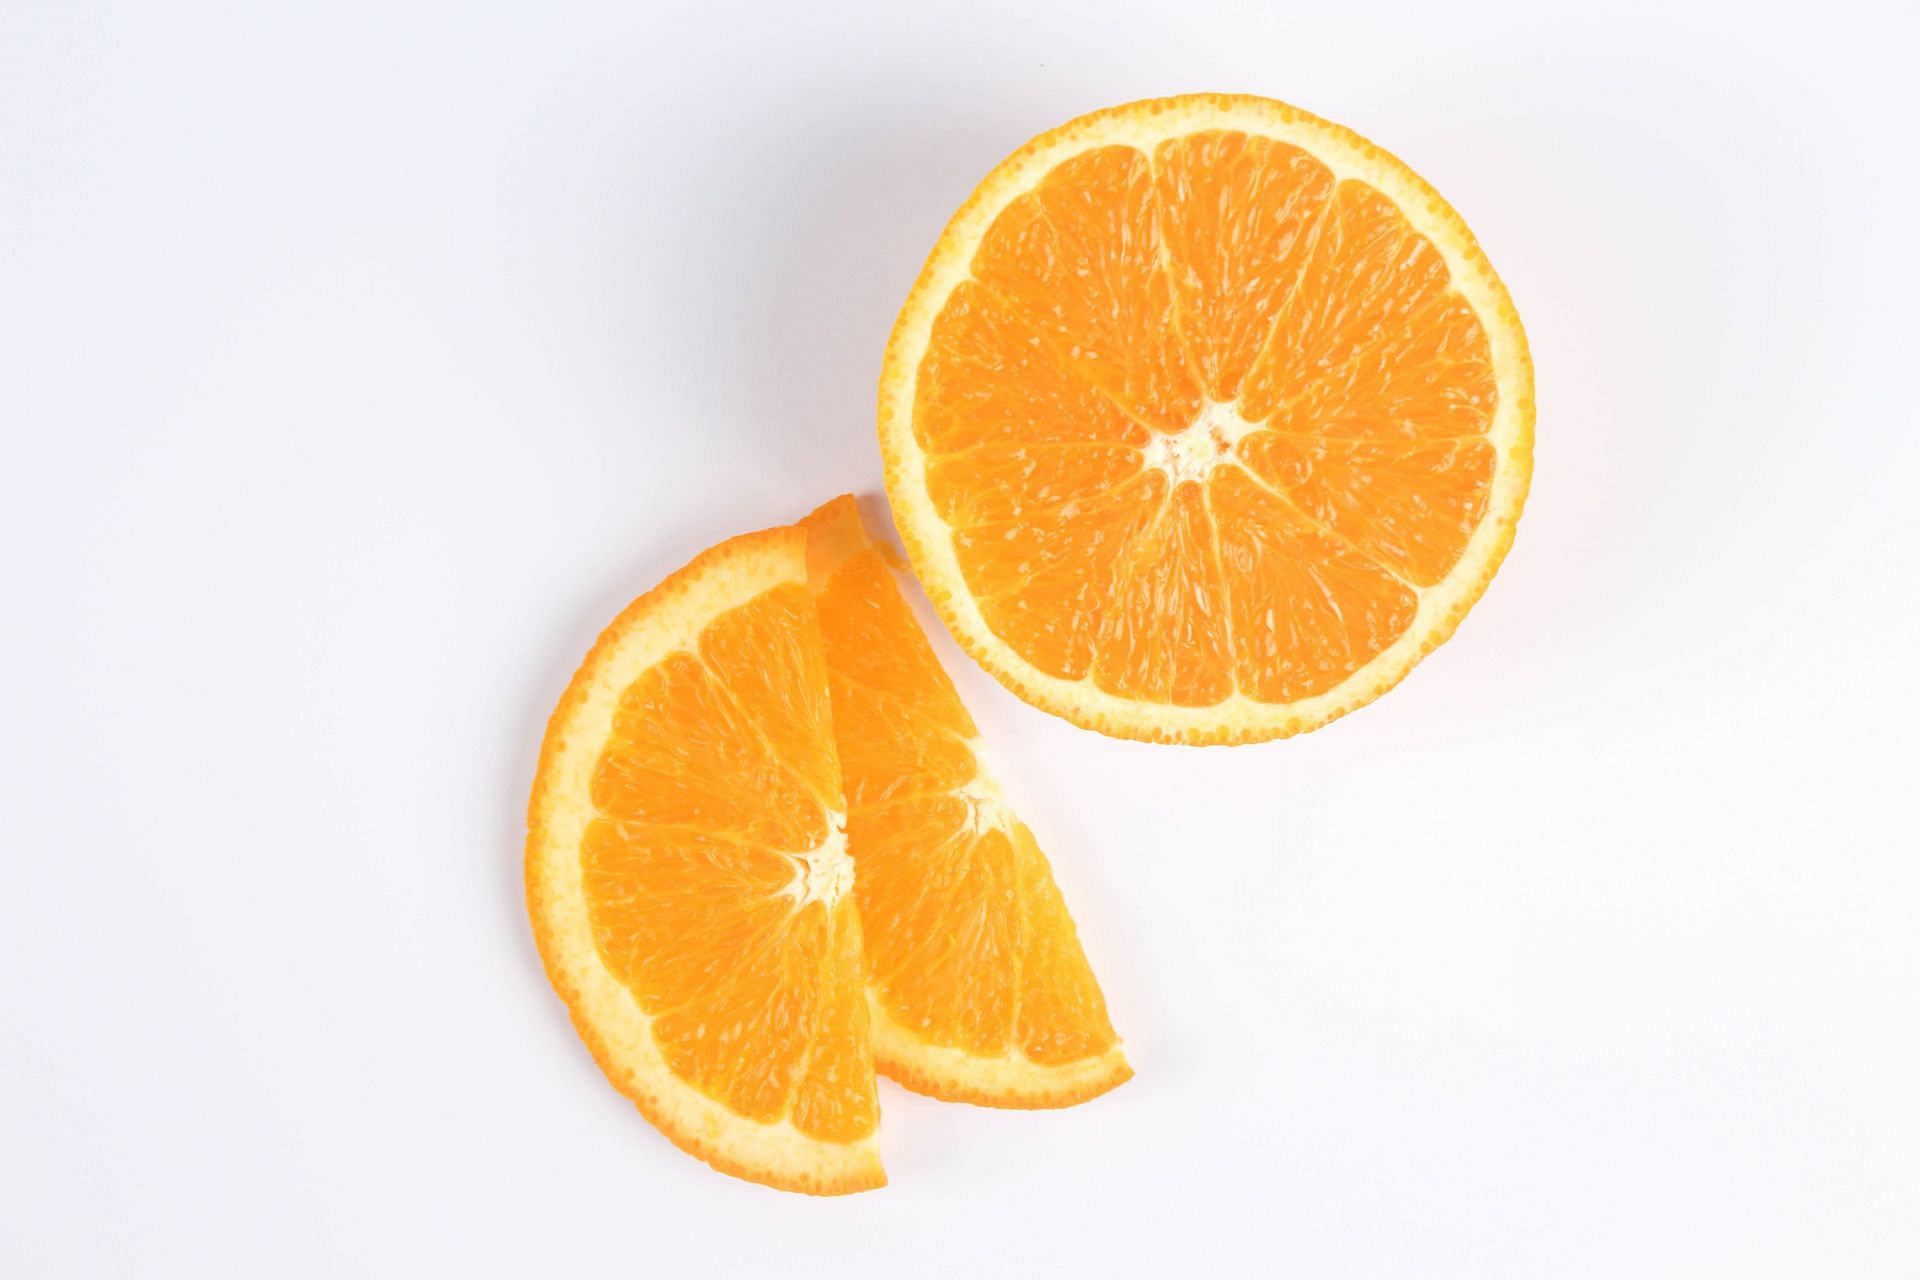 Impressive health benefits of nutrients in orange (Image via Unsplash/Chang Duong)